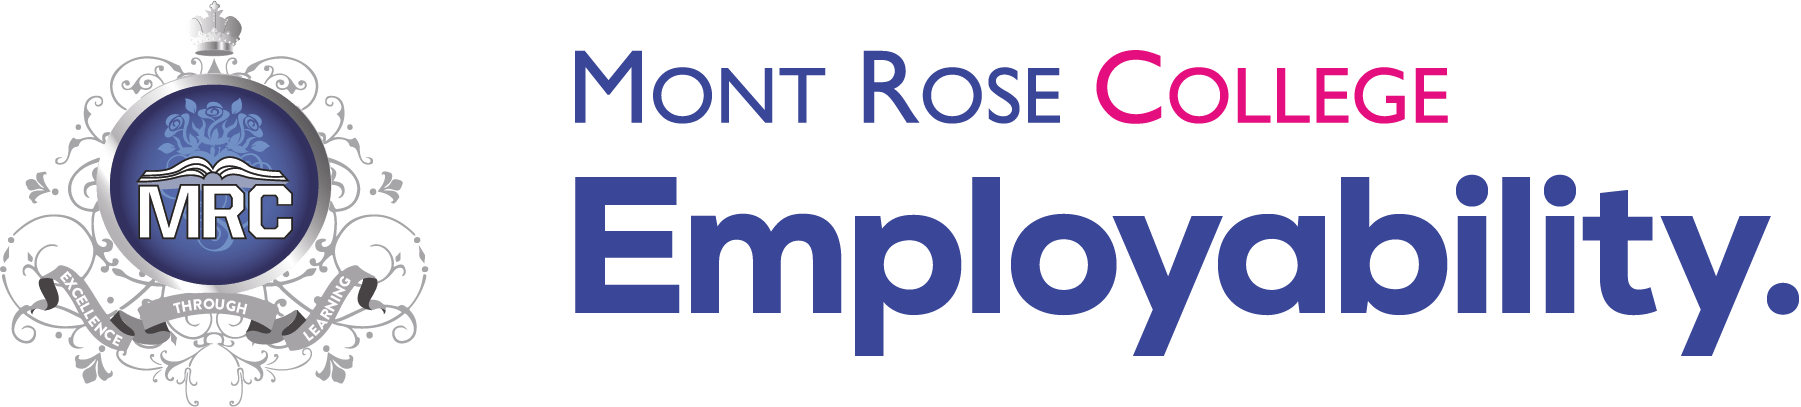 Mont Rose College Employability